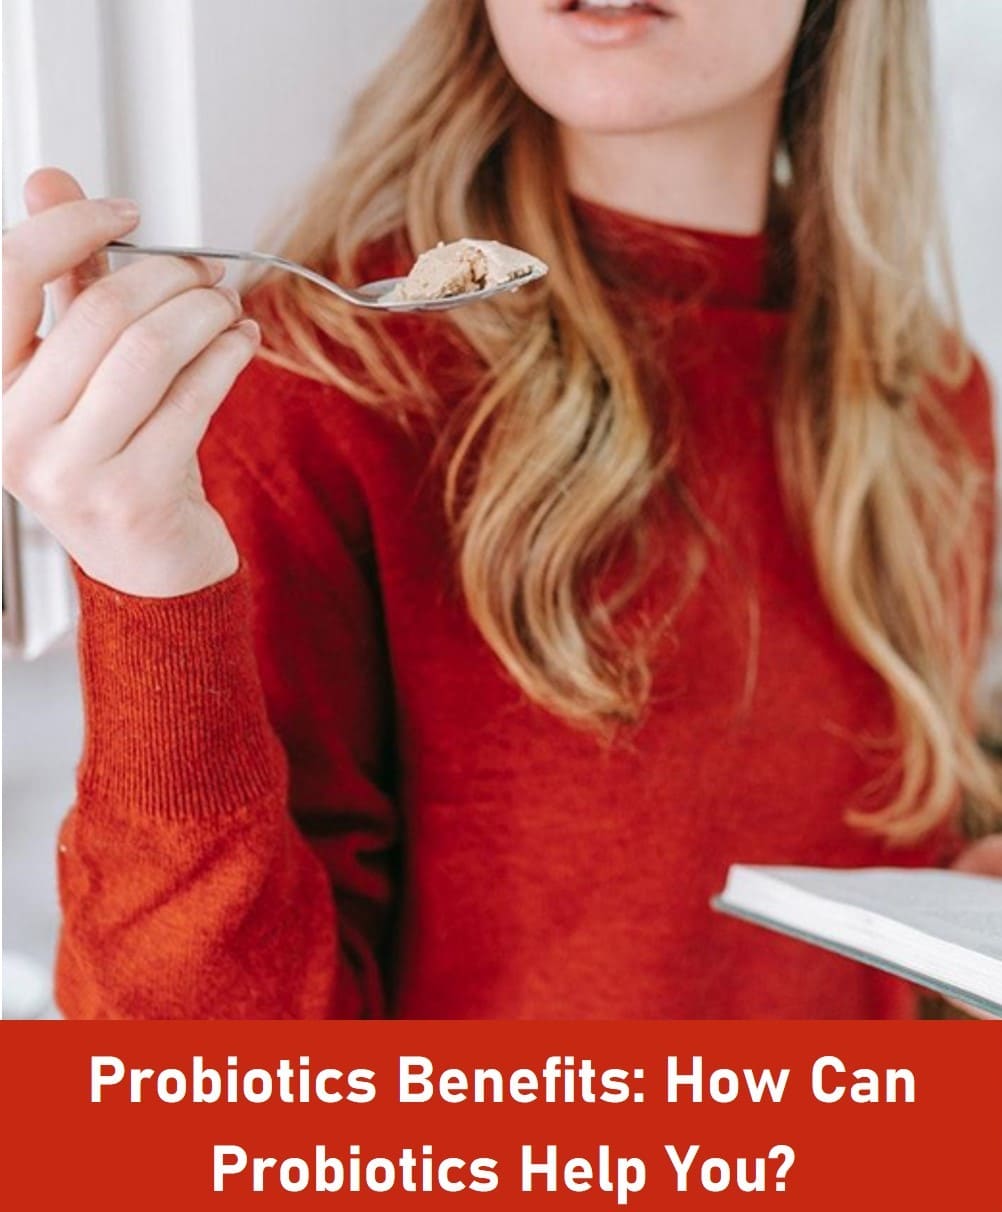 Probiotics Benefits: How Can Probiotics Help You?